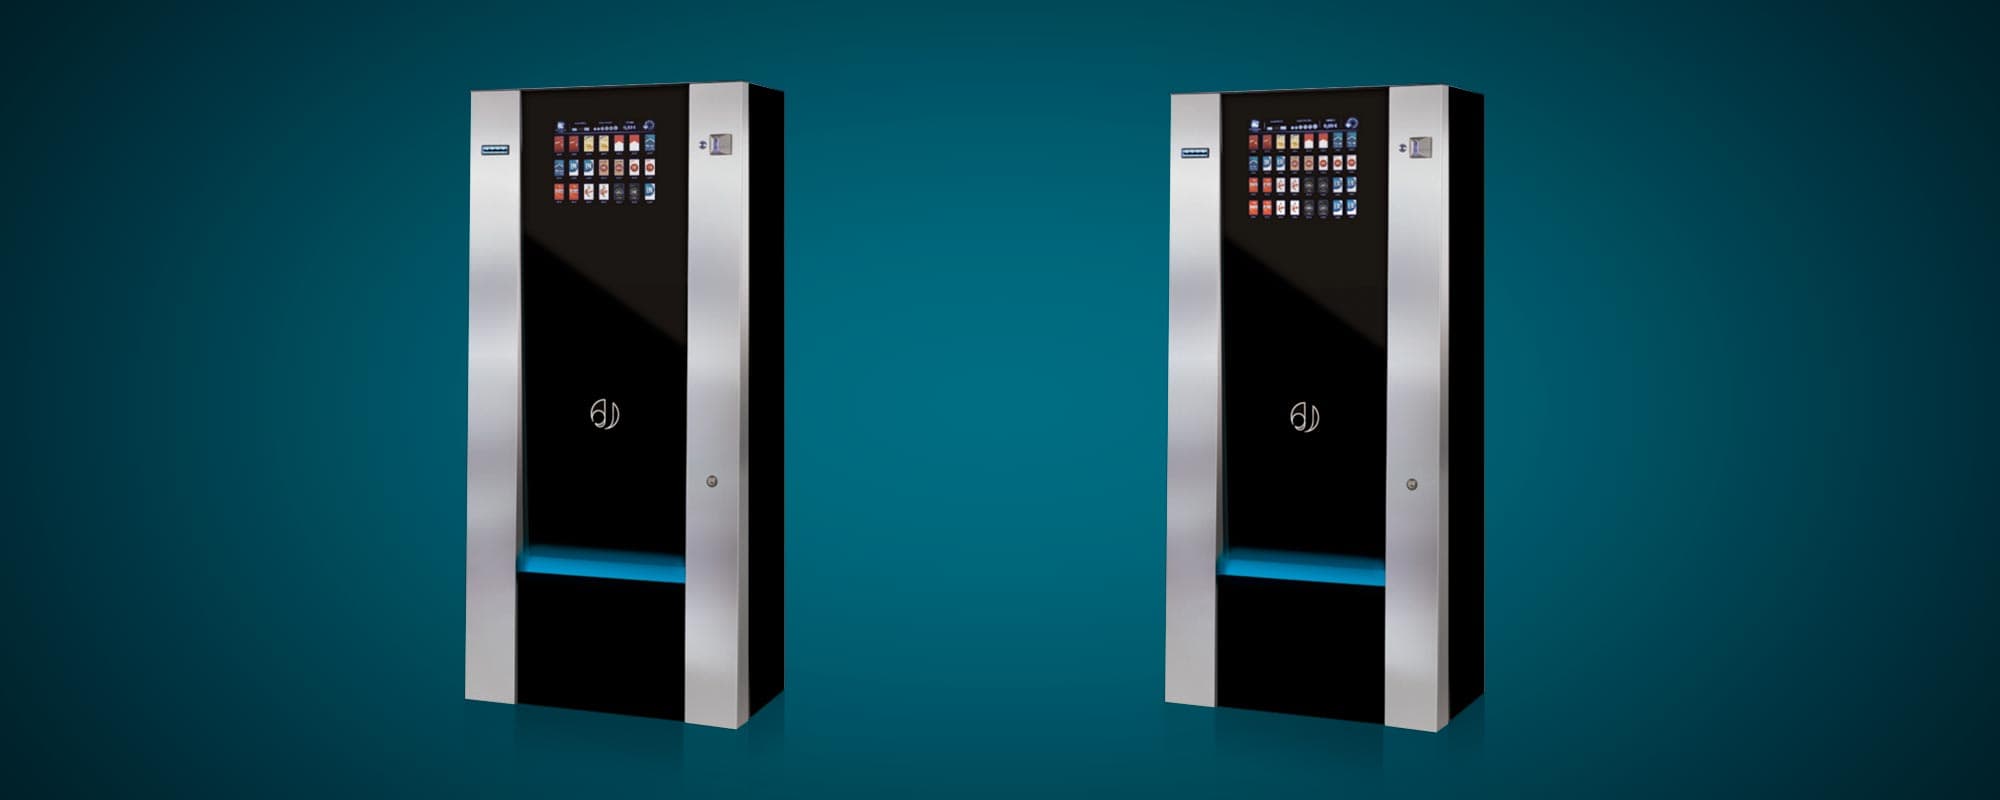 JOFEMAR Bluetec Touch cigarette vending machines